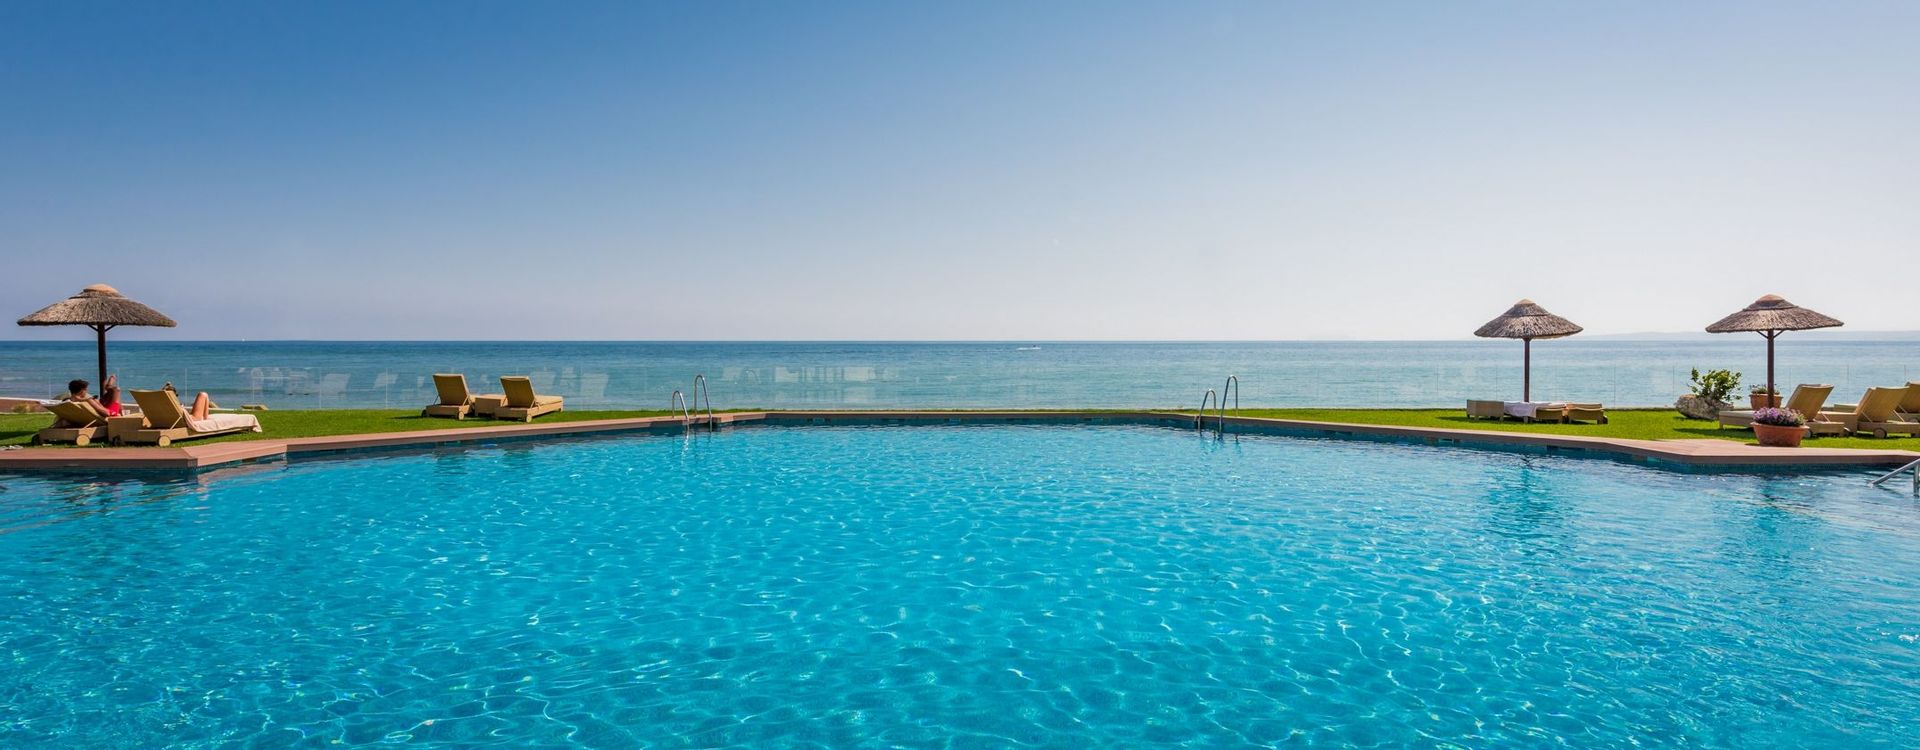 Hotel Las Dunas sea pool.jpg